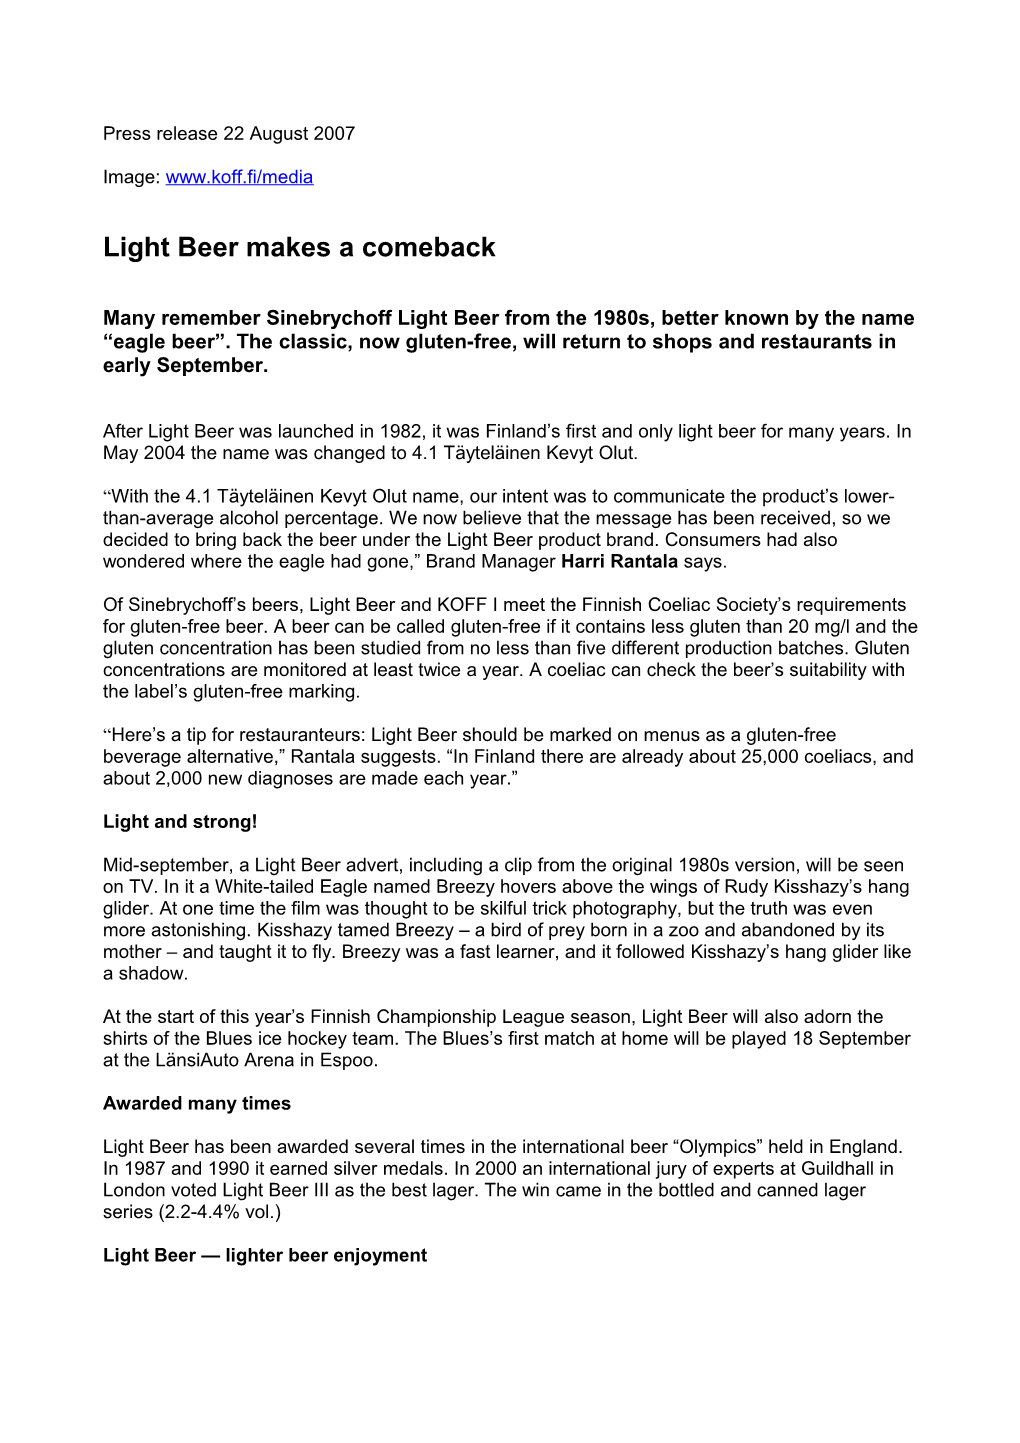 Light Beer Makes a Comeback